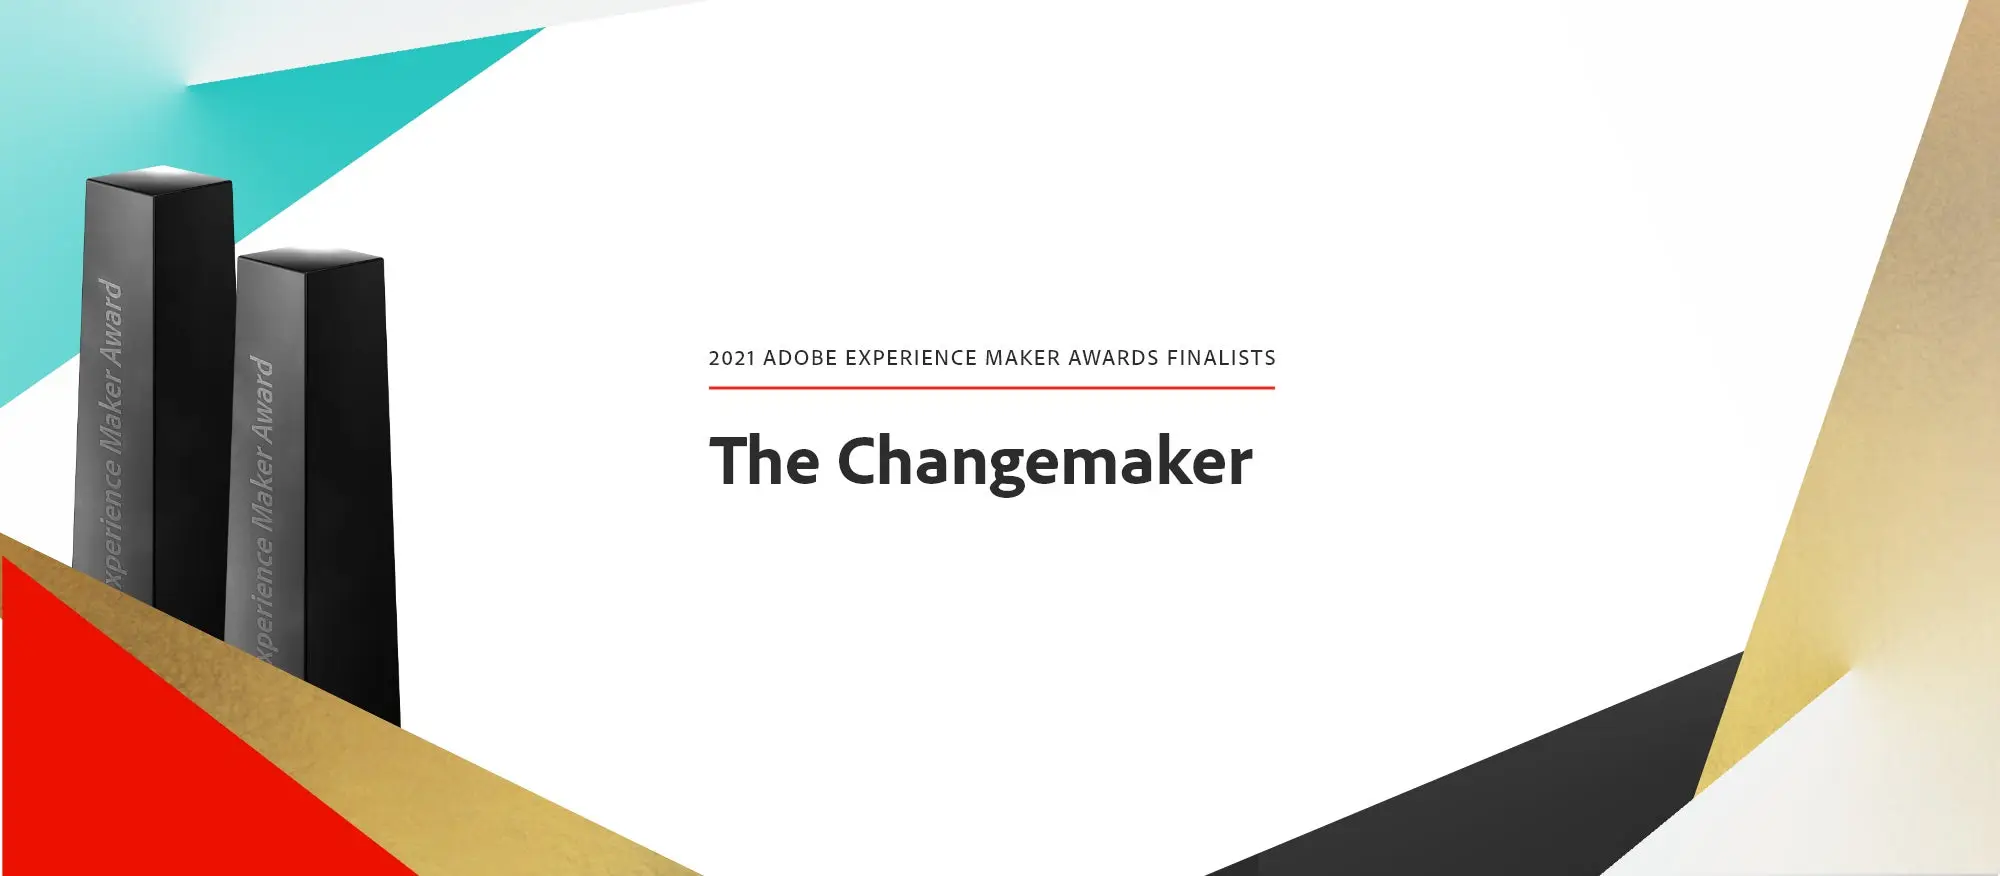 2021 Adobe Experience Maker Awards Finalists.
The Changemaker. 